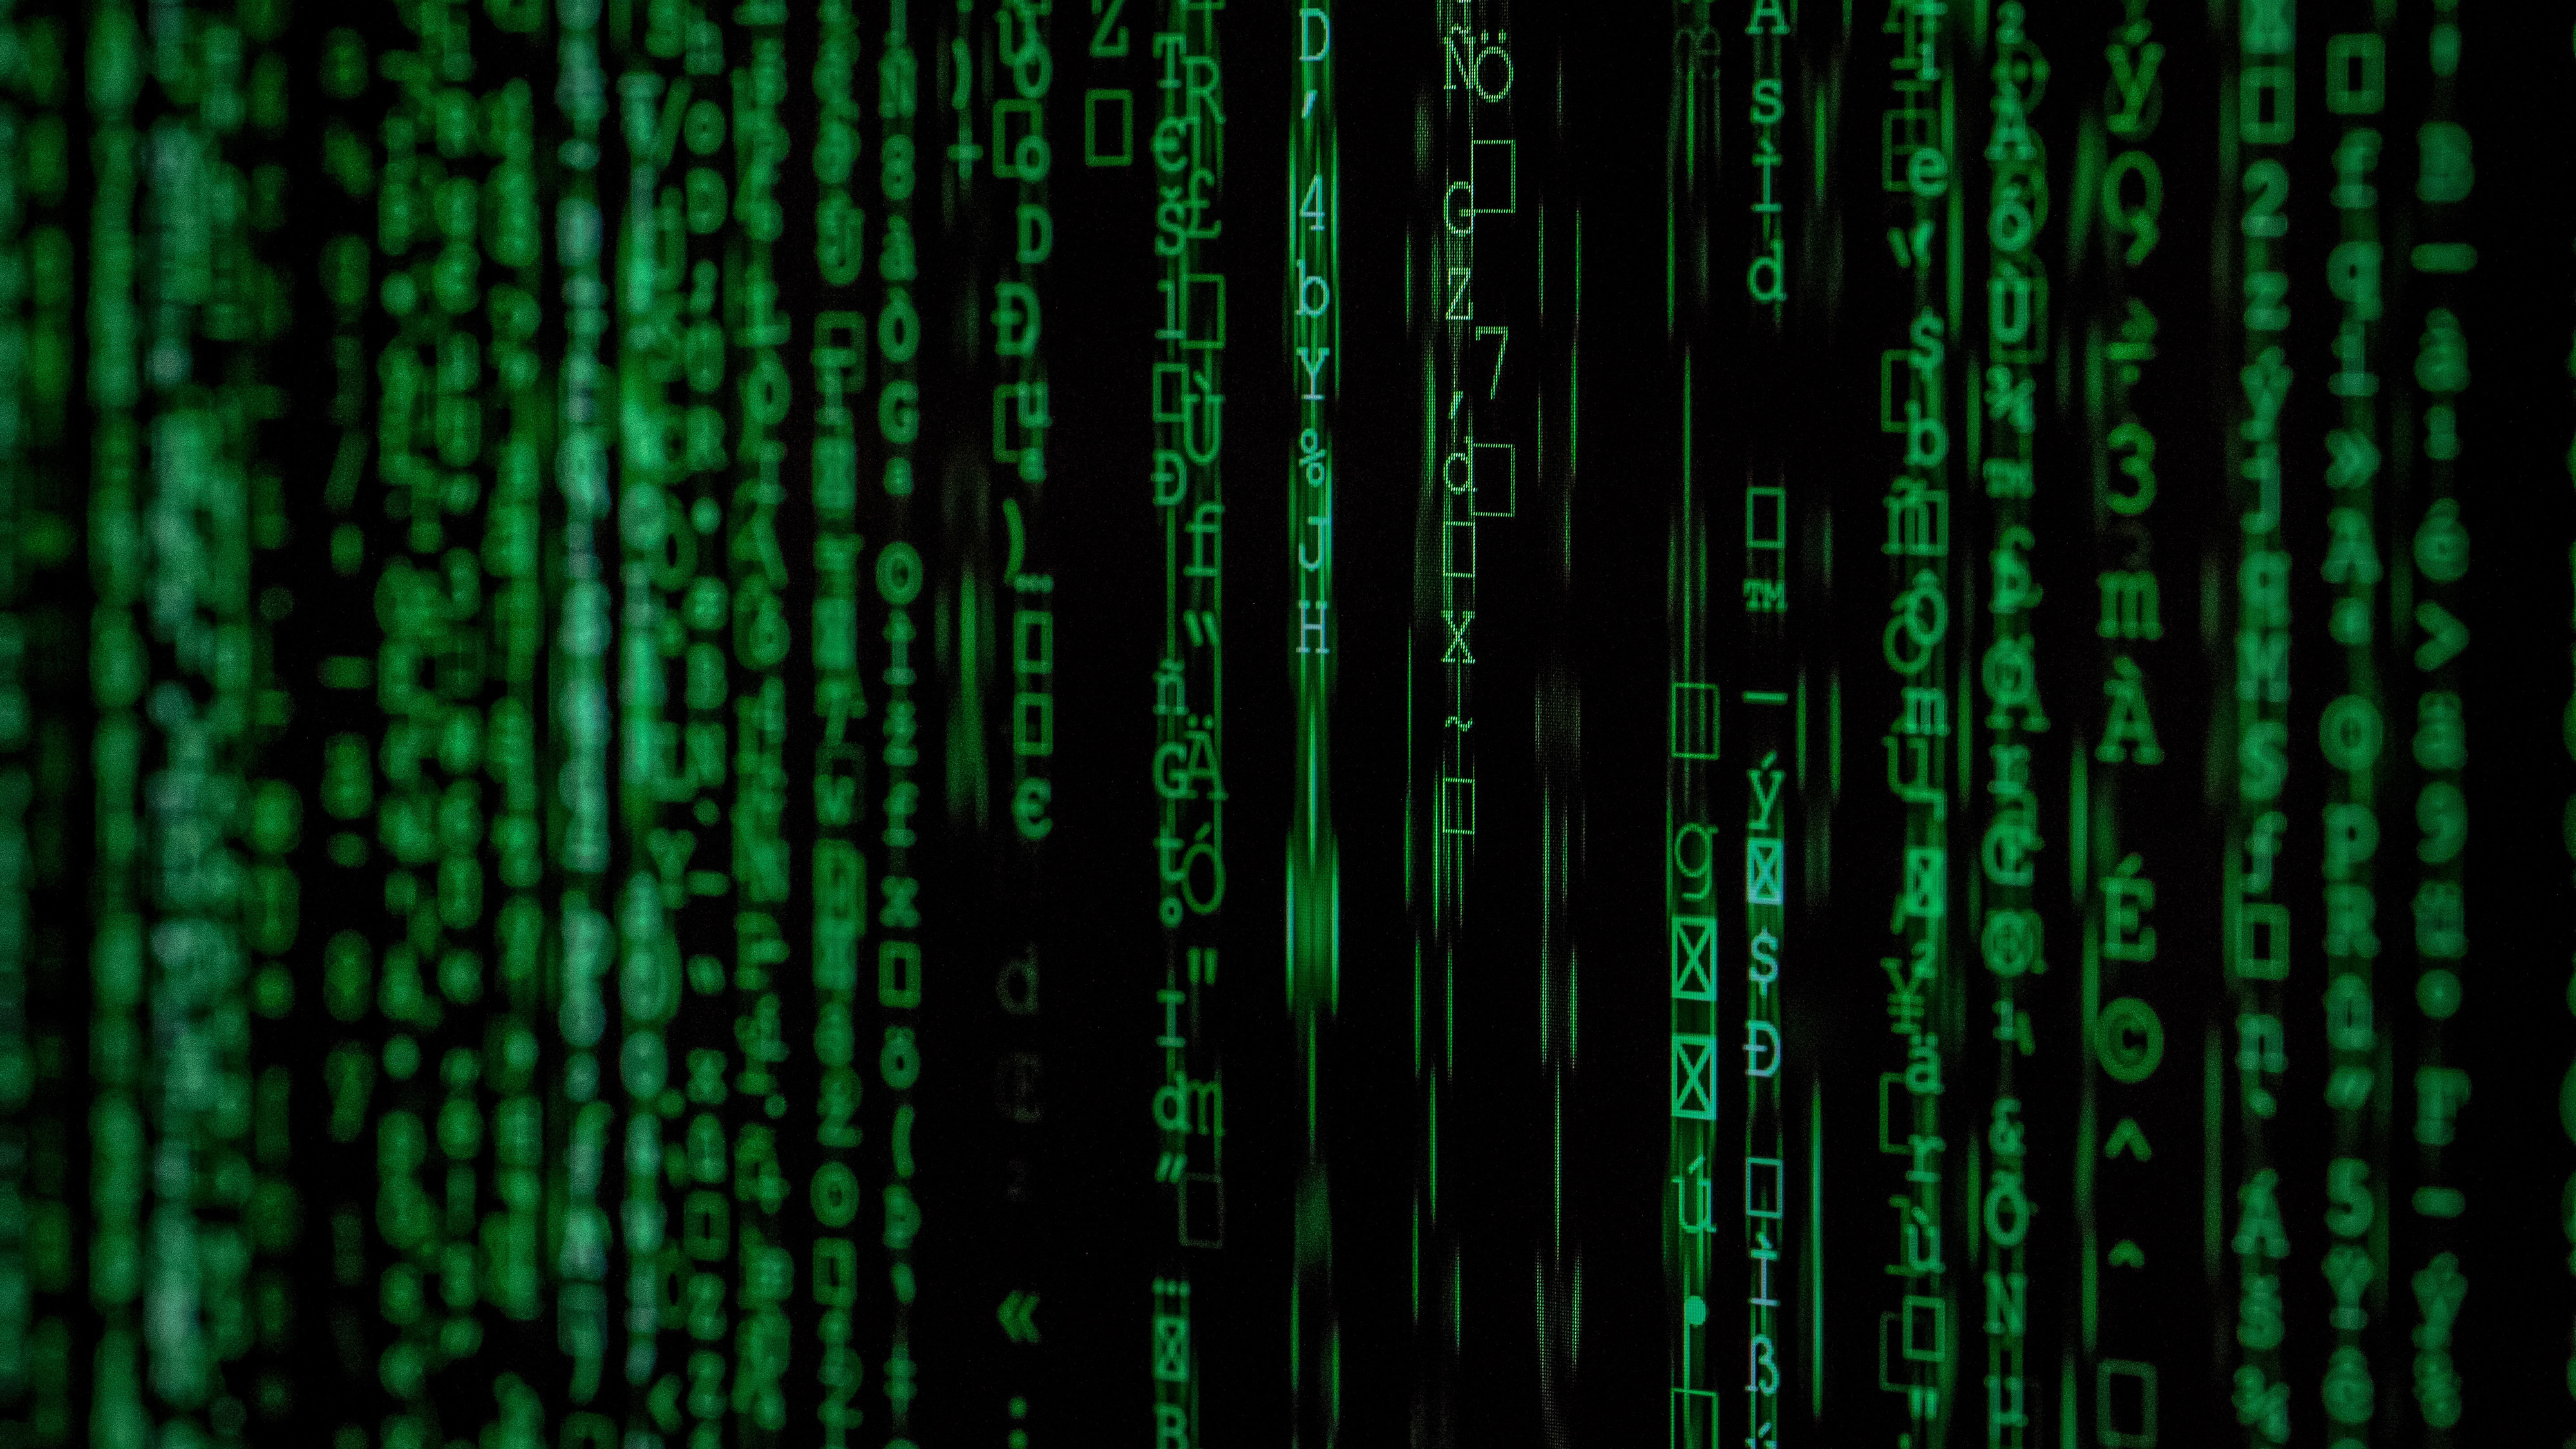 Matrix-style data running down the screen